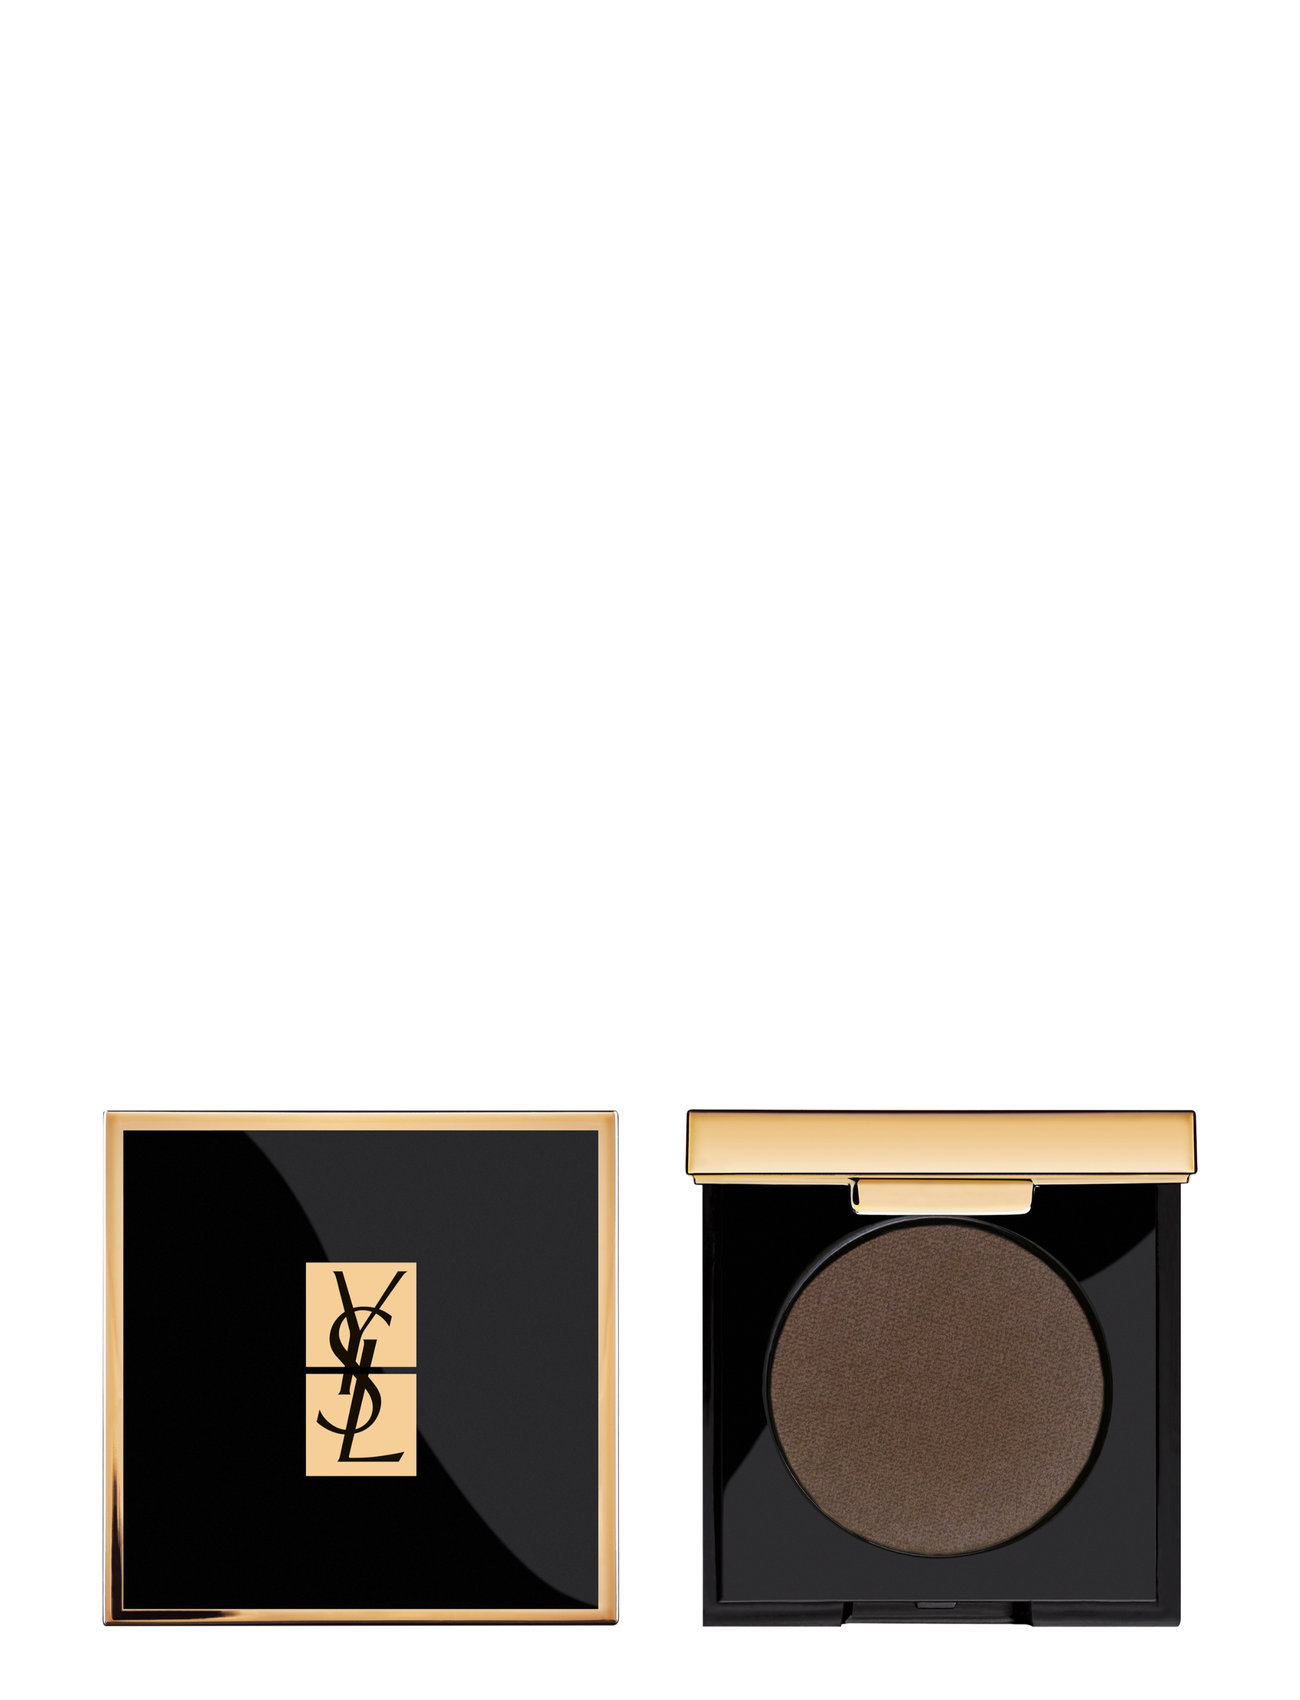 Velvet Crush Mono 33 Star Shades Beauty WOMEN Makeup Eyes Eyeshadow - Not Palettes Ruskea Yves Saint Laurent